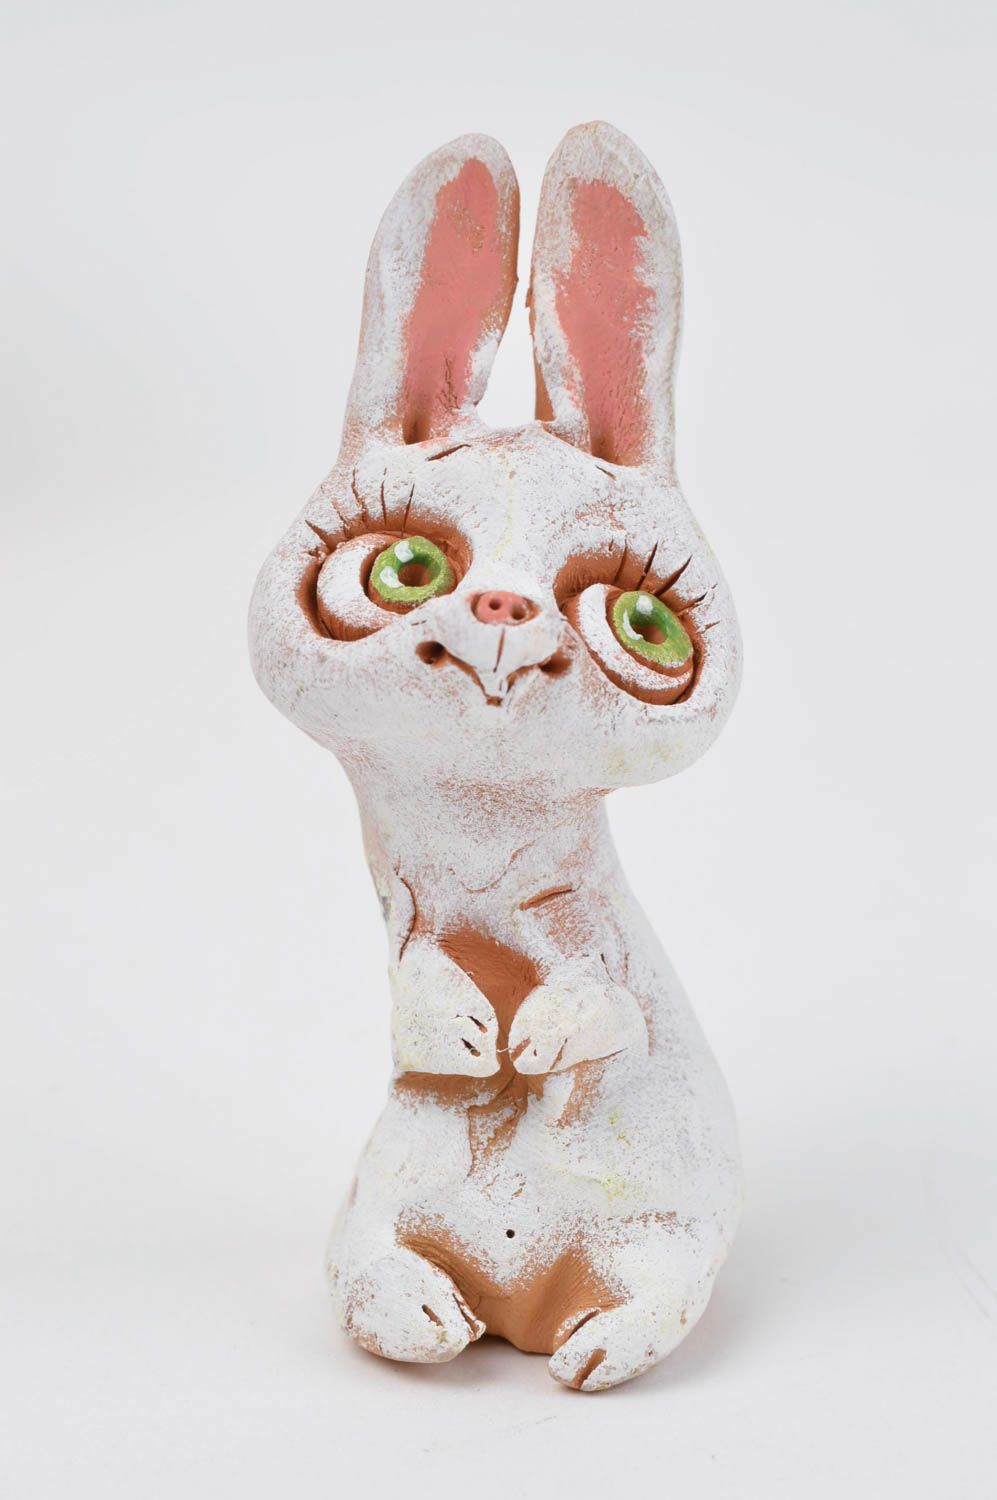 Keramik Deko handmade Figur aus Ton Tier Statue stilvoll Miniatur Figur schön foto 2